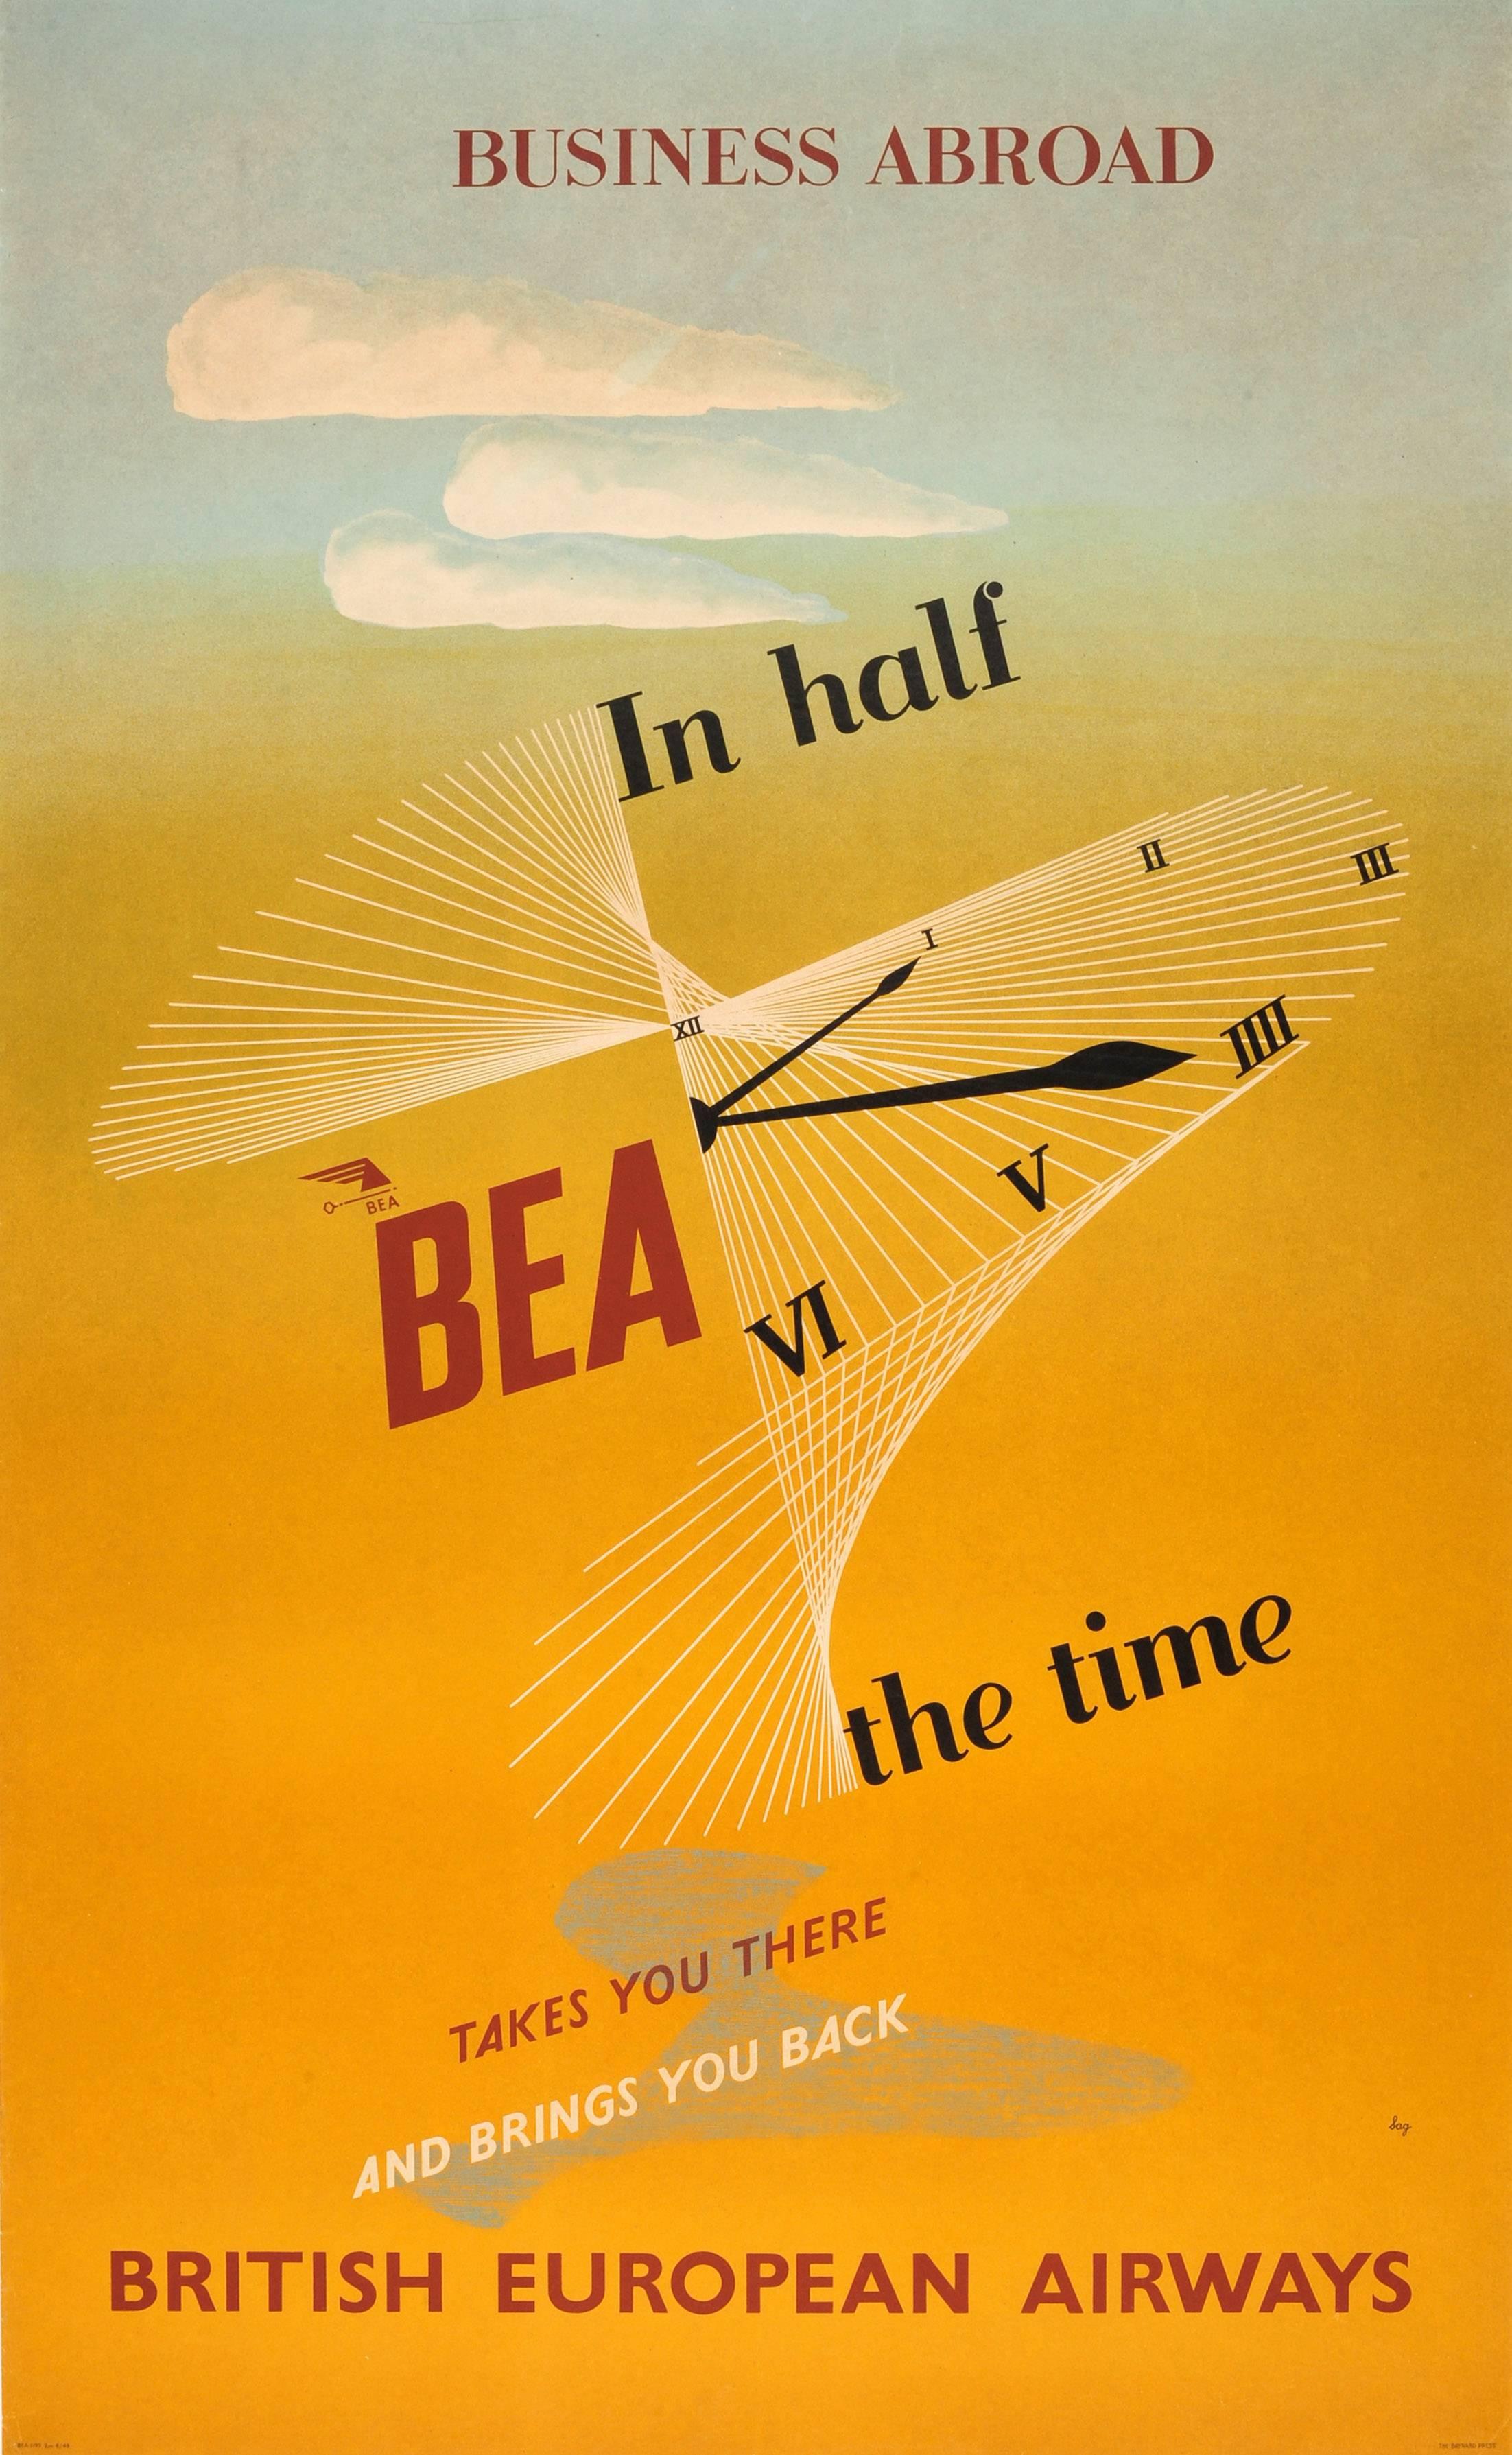 Original Vintage Midcentury British European Airways Poster For Business Abroad